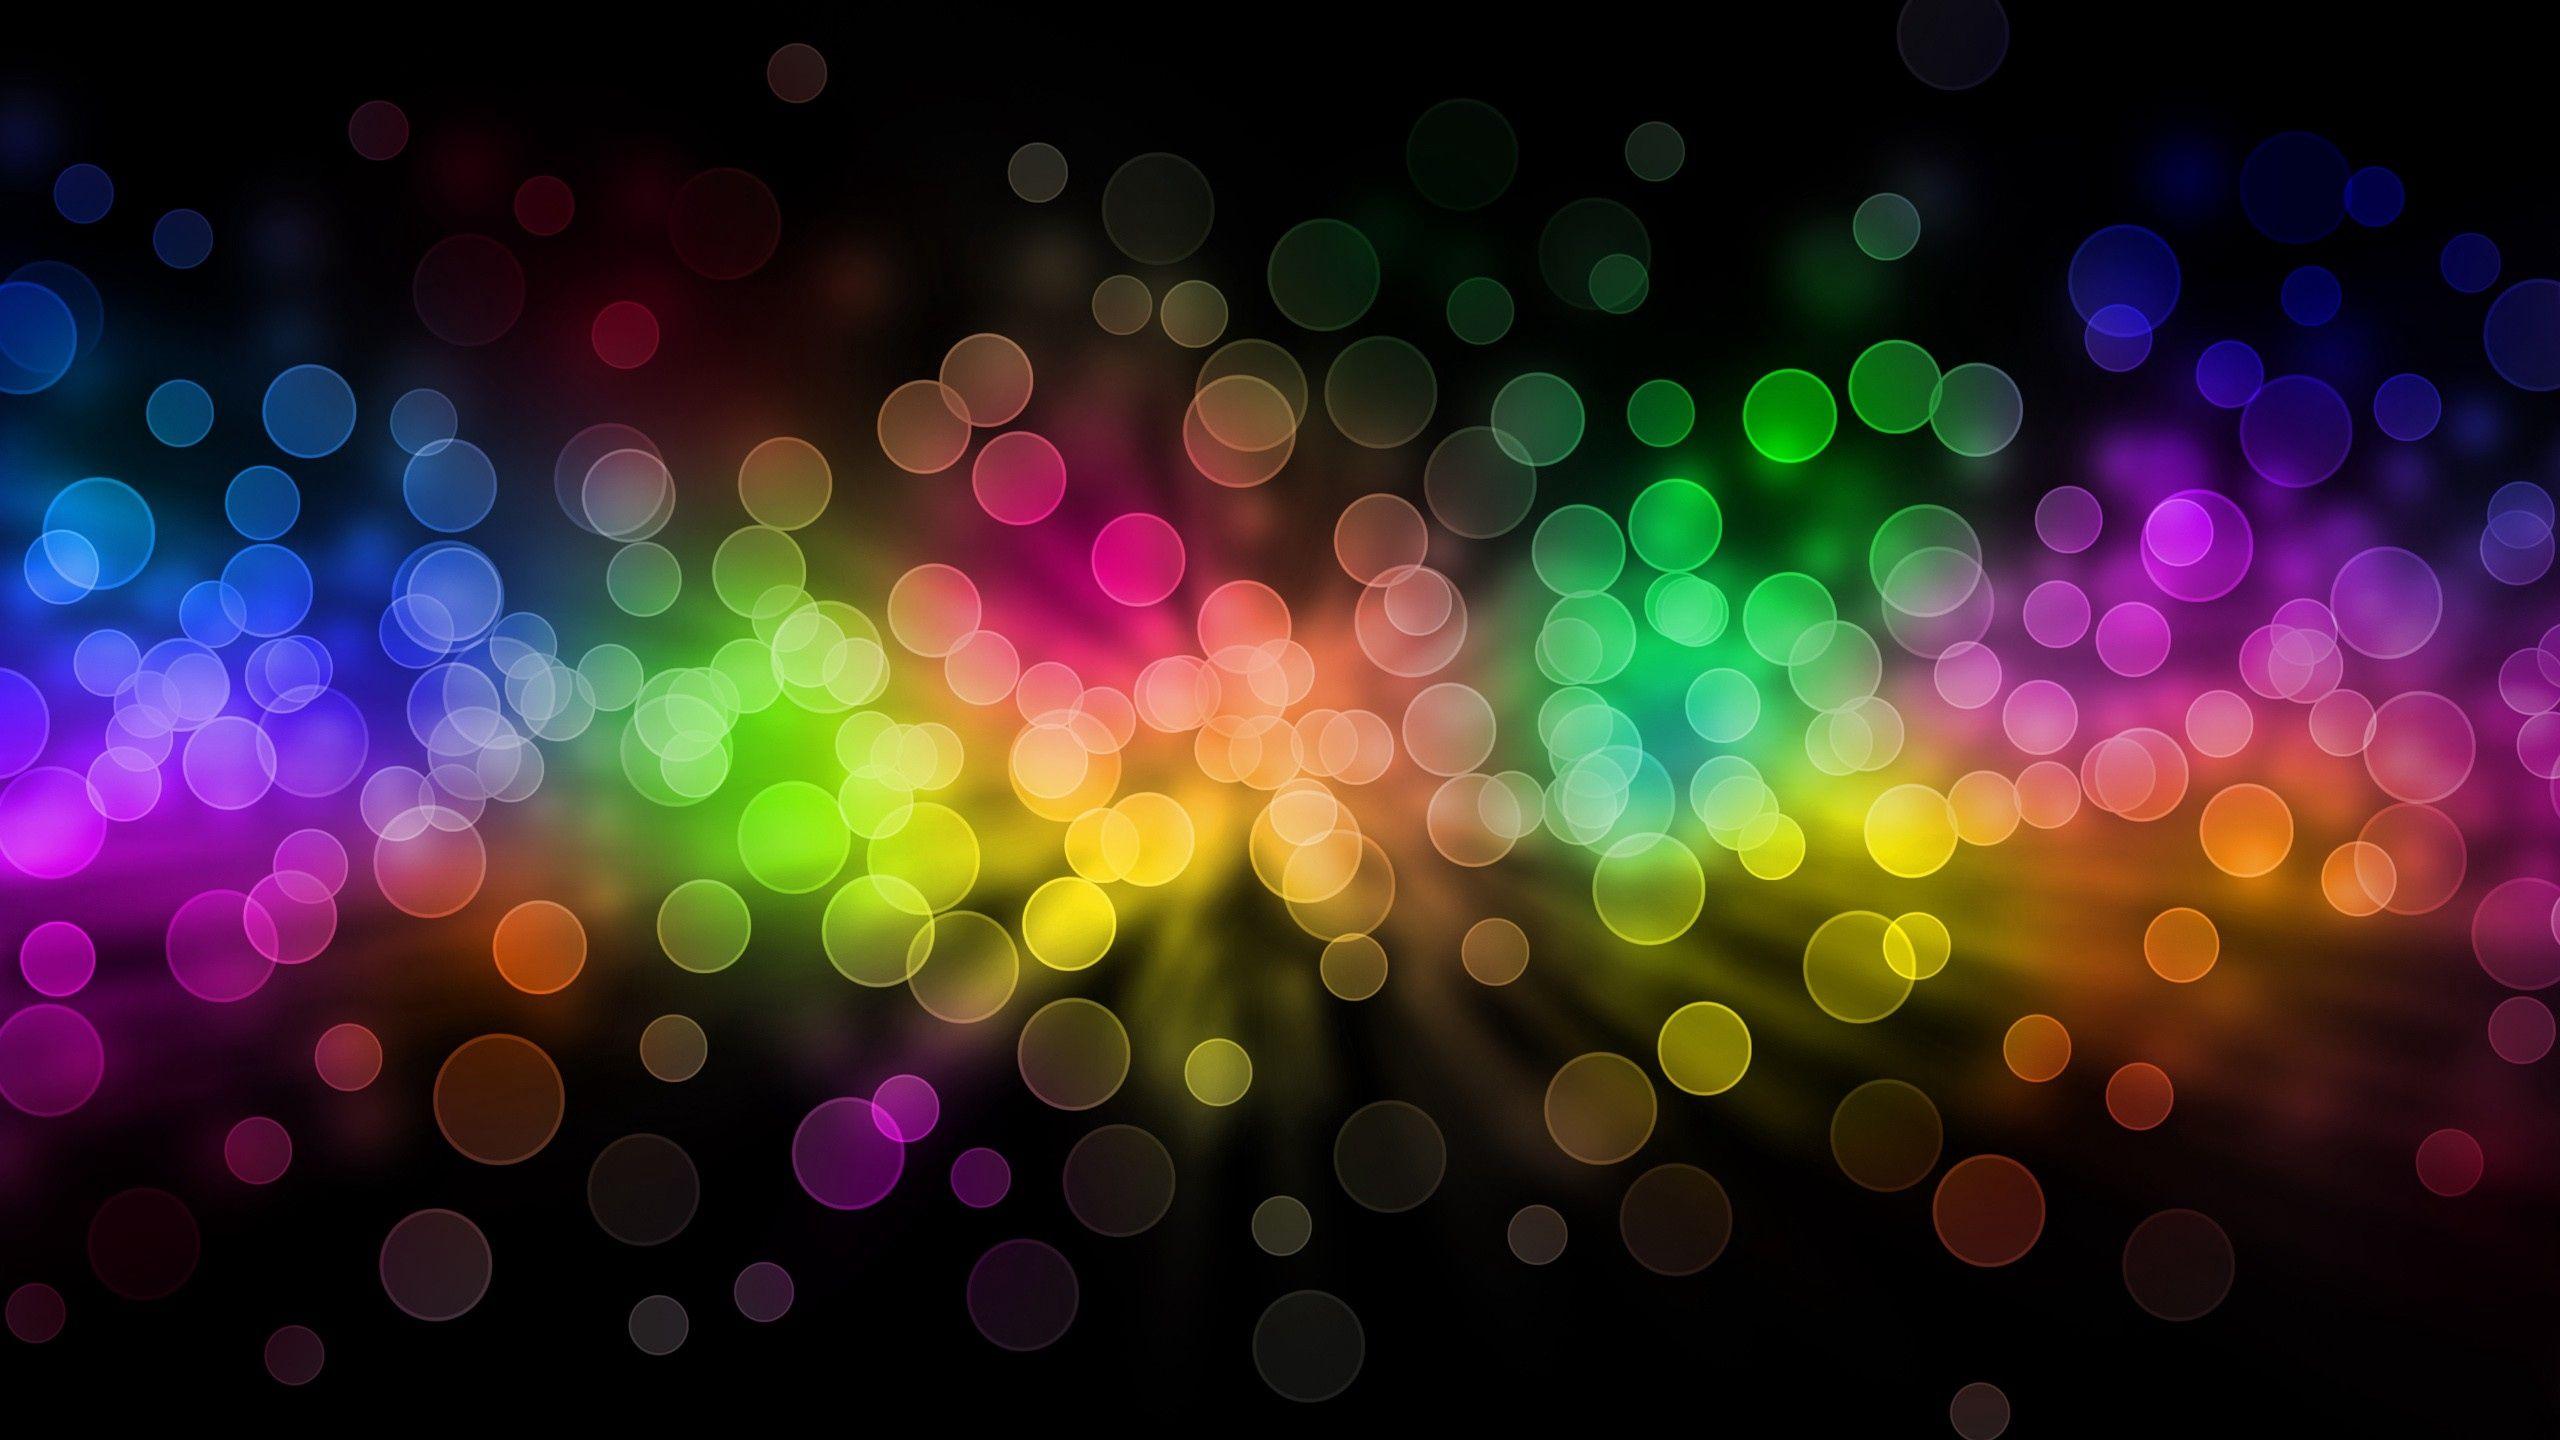 Download wallpaper 2560x1440 glare, rainbow, circles, background